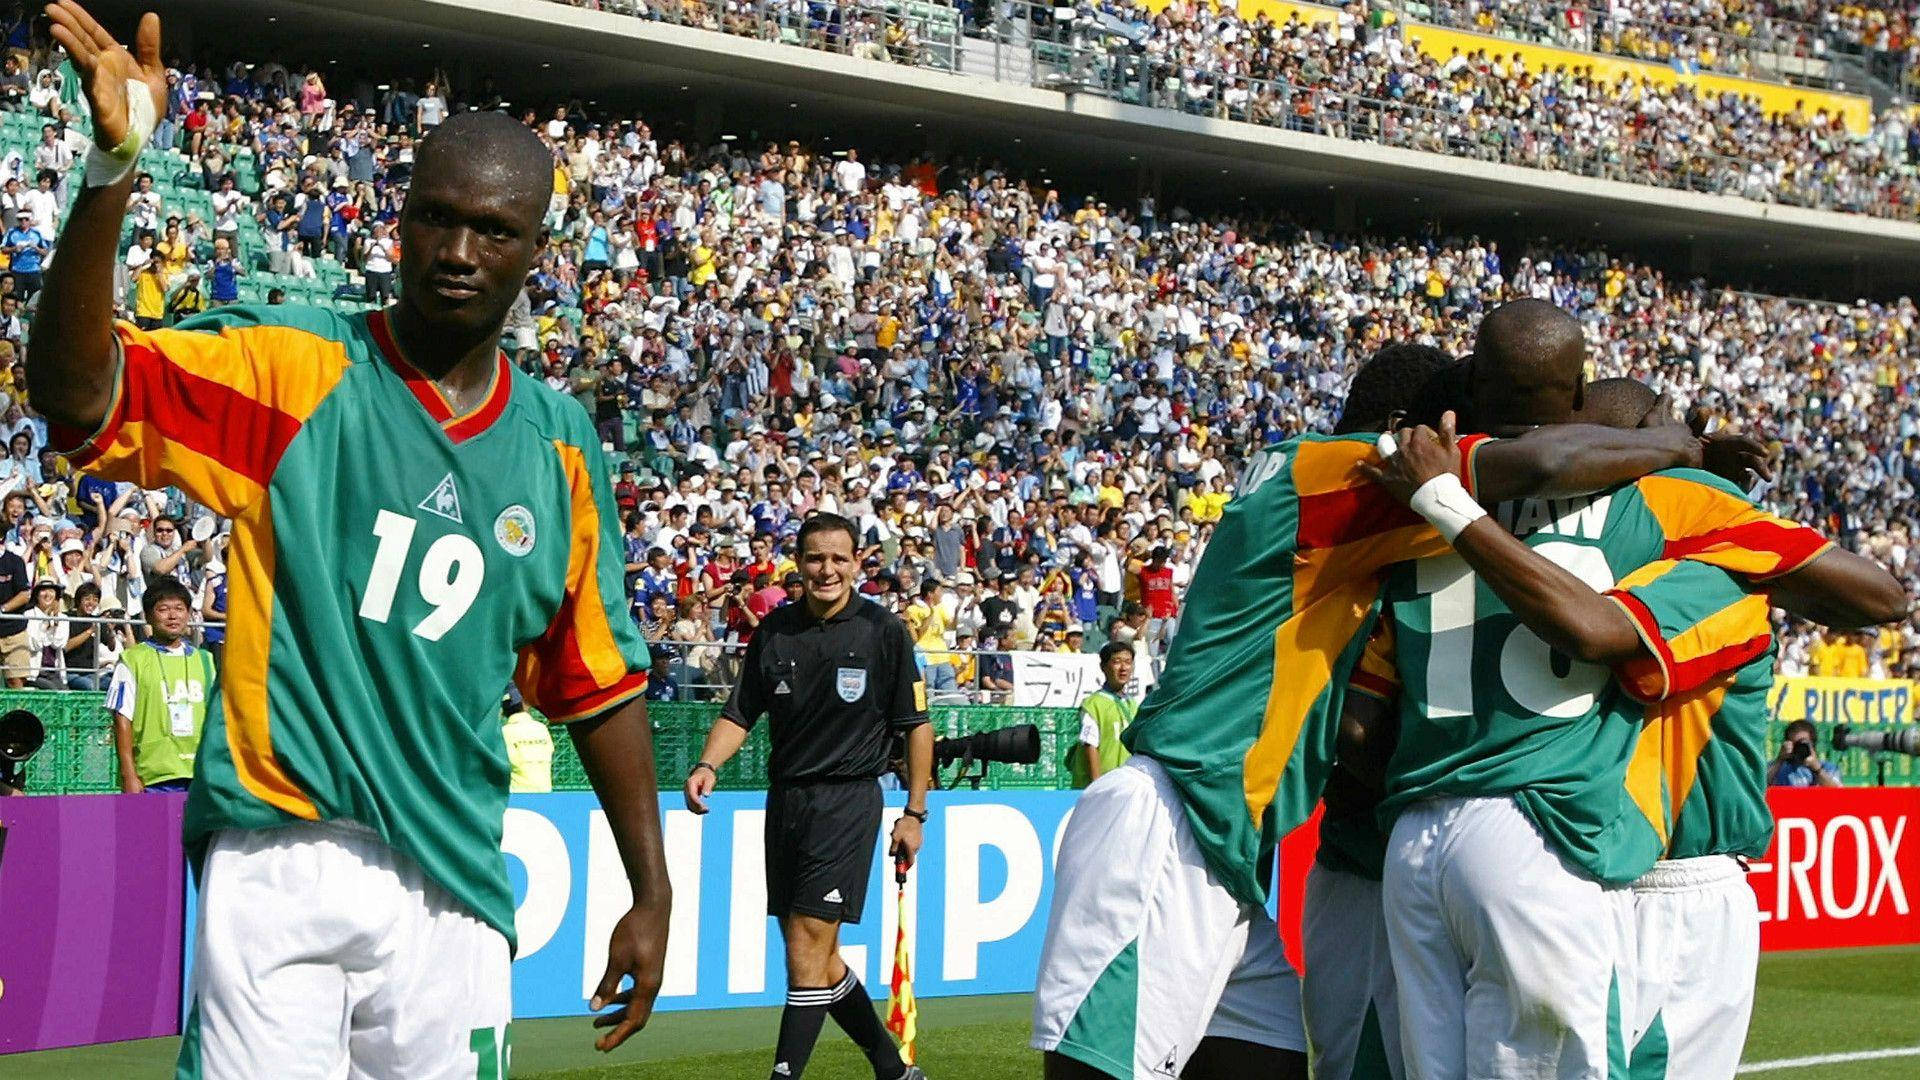 Senegal Football Team